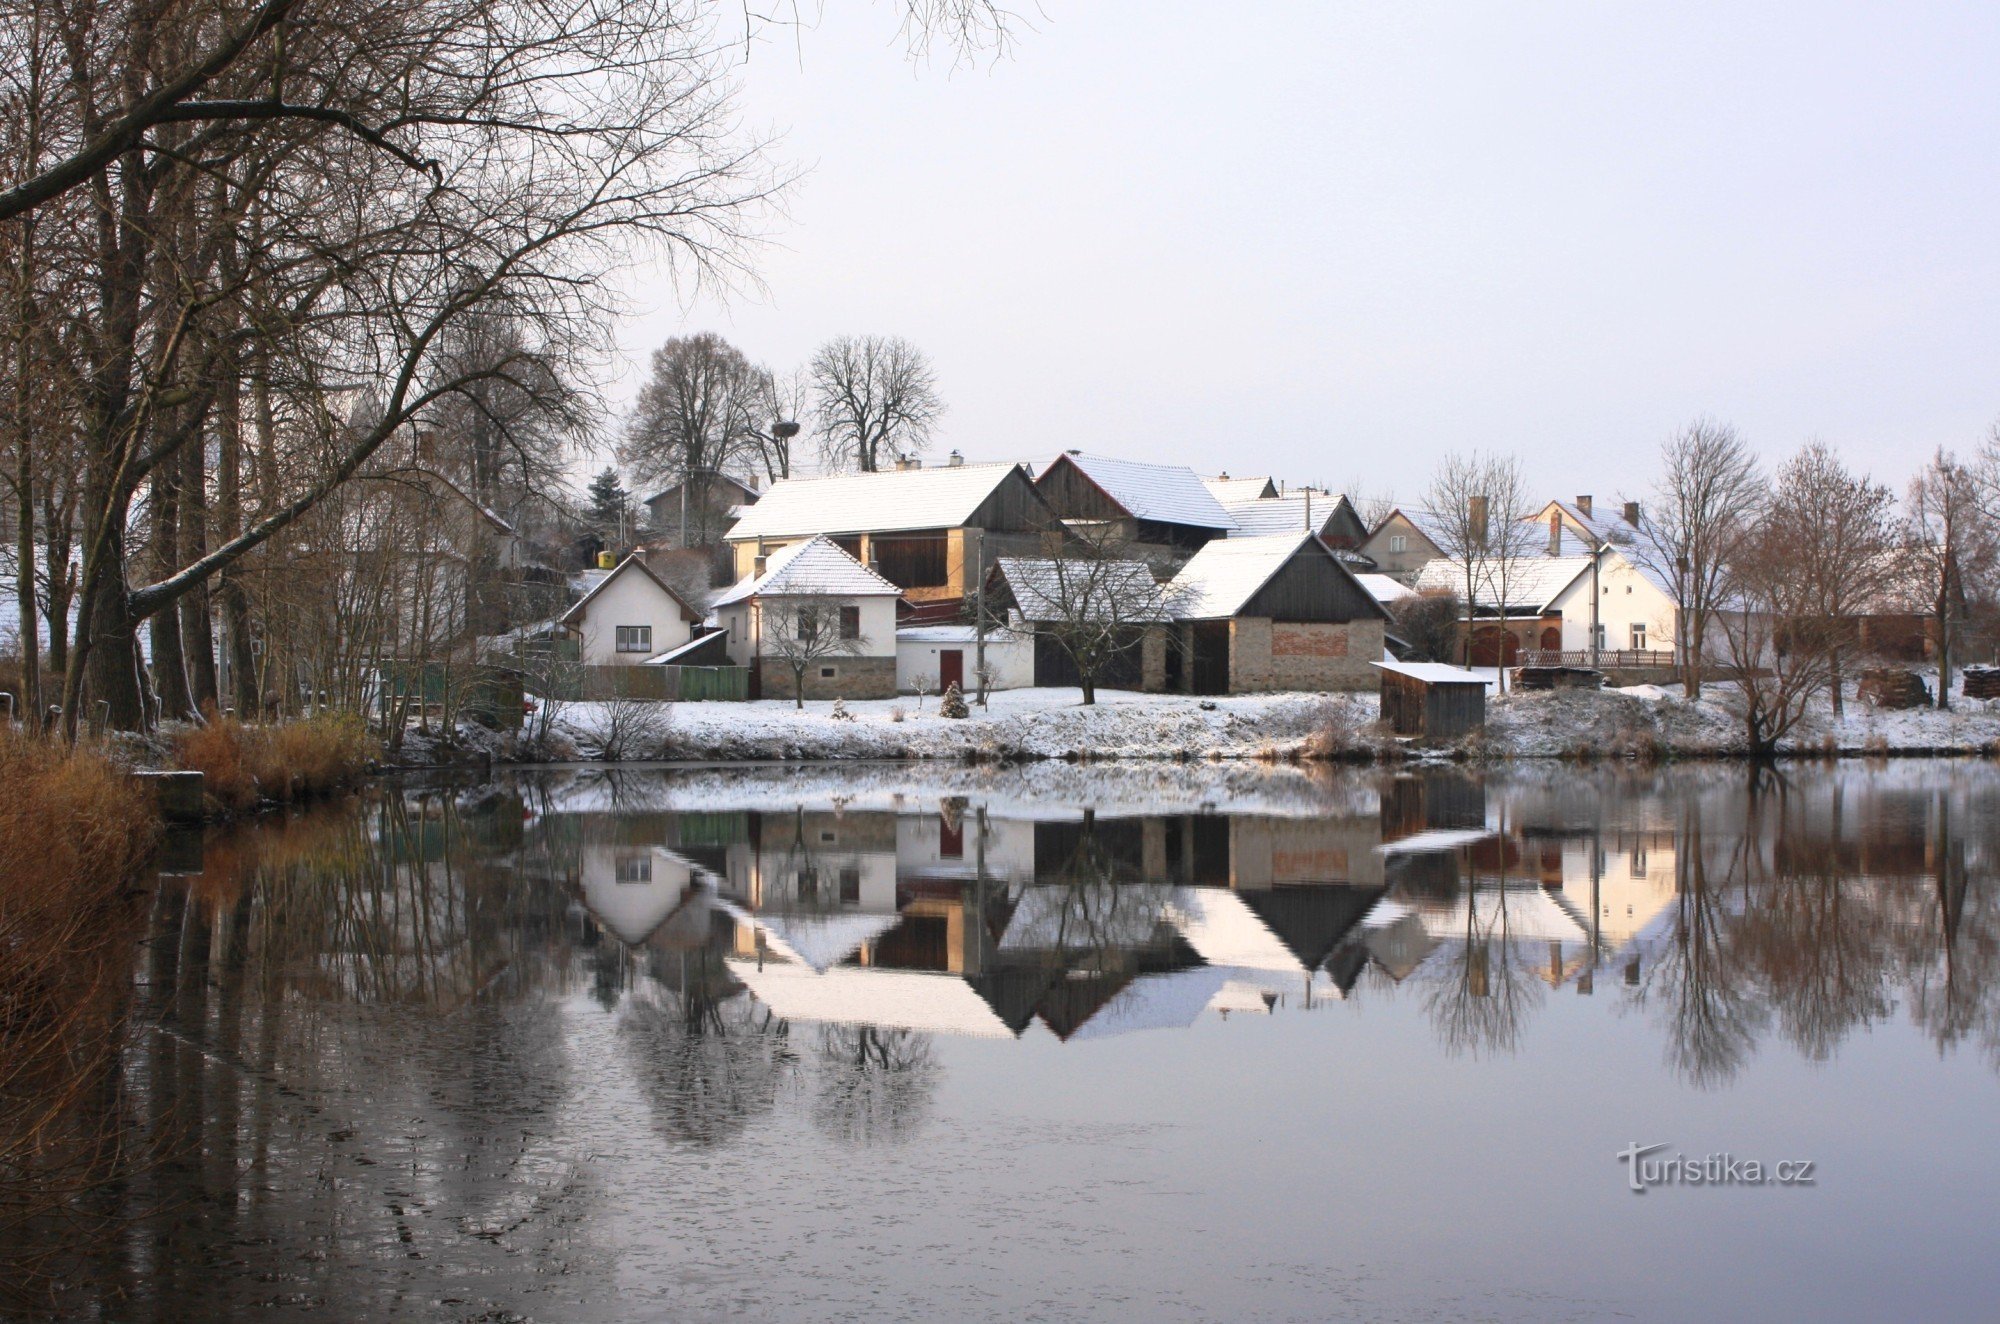 Ronov - parte da aldeia perto da lagoa Tvrzské